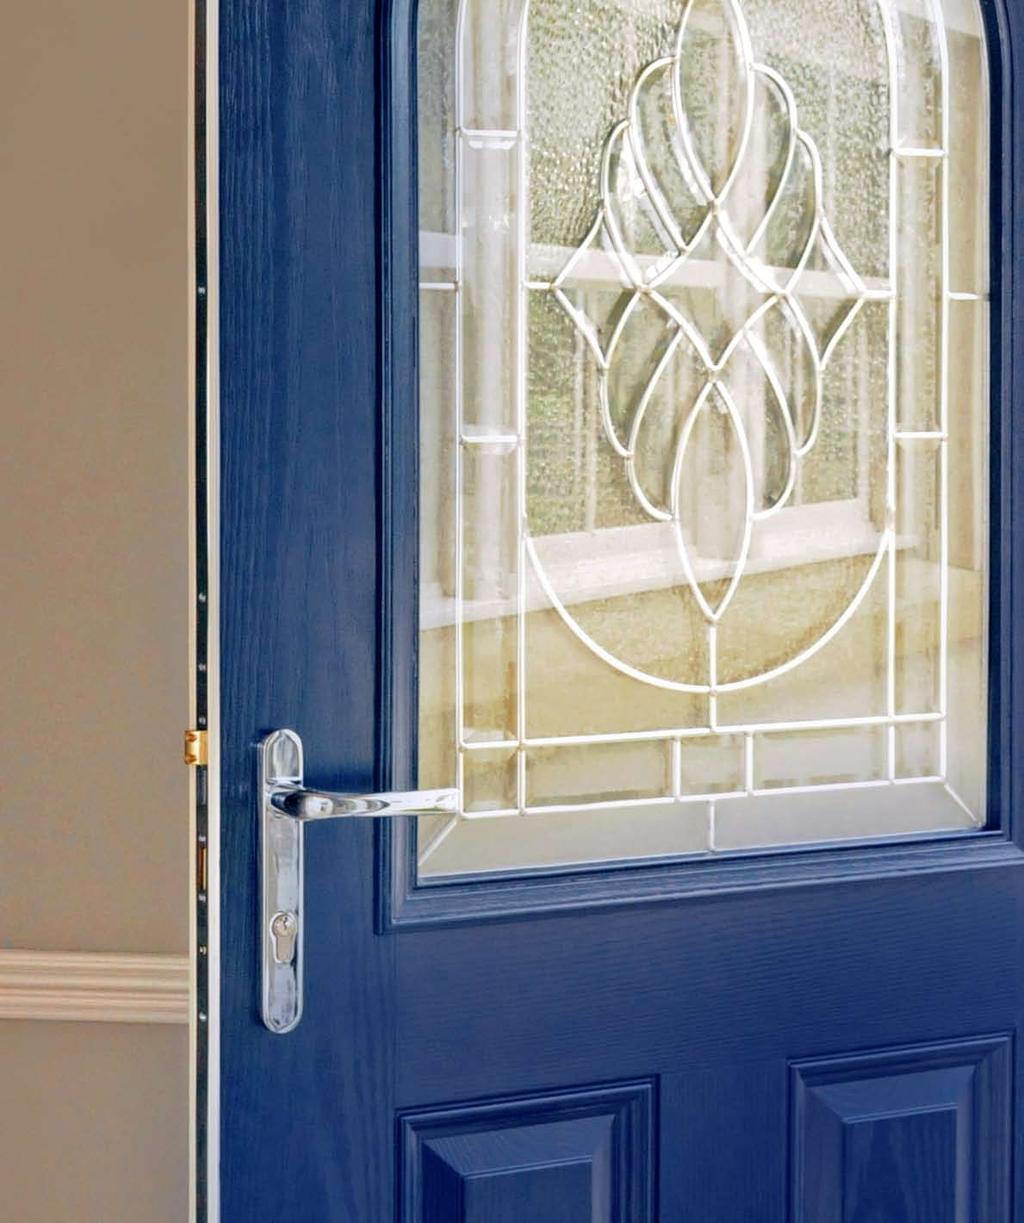 Cottage-Door Designs Key: DG - Double Glazing and TG - Triple Glazing